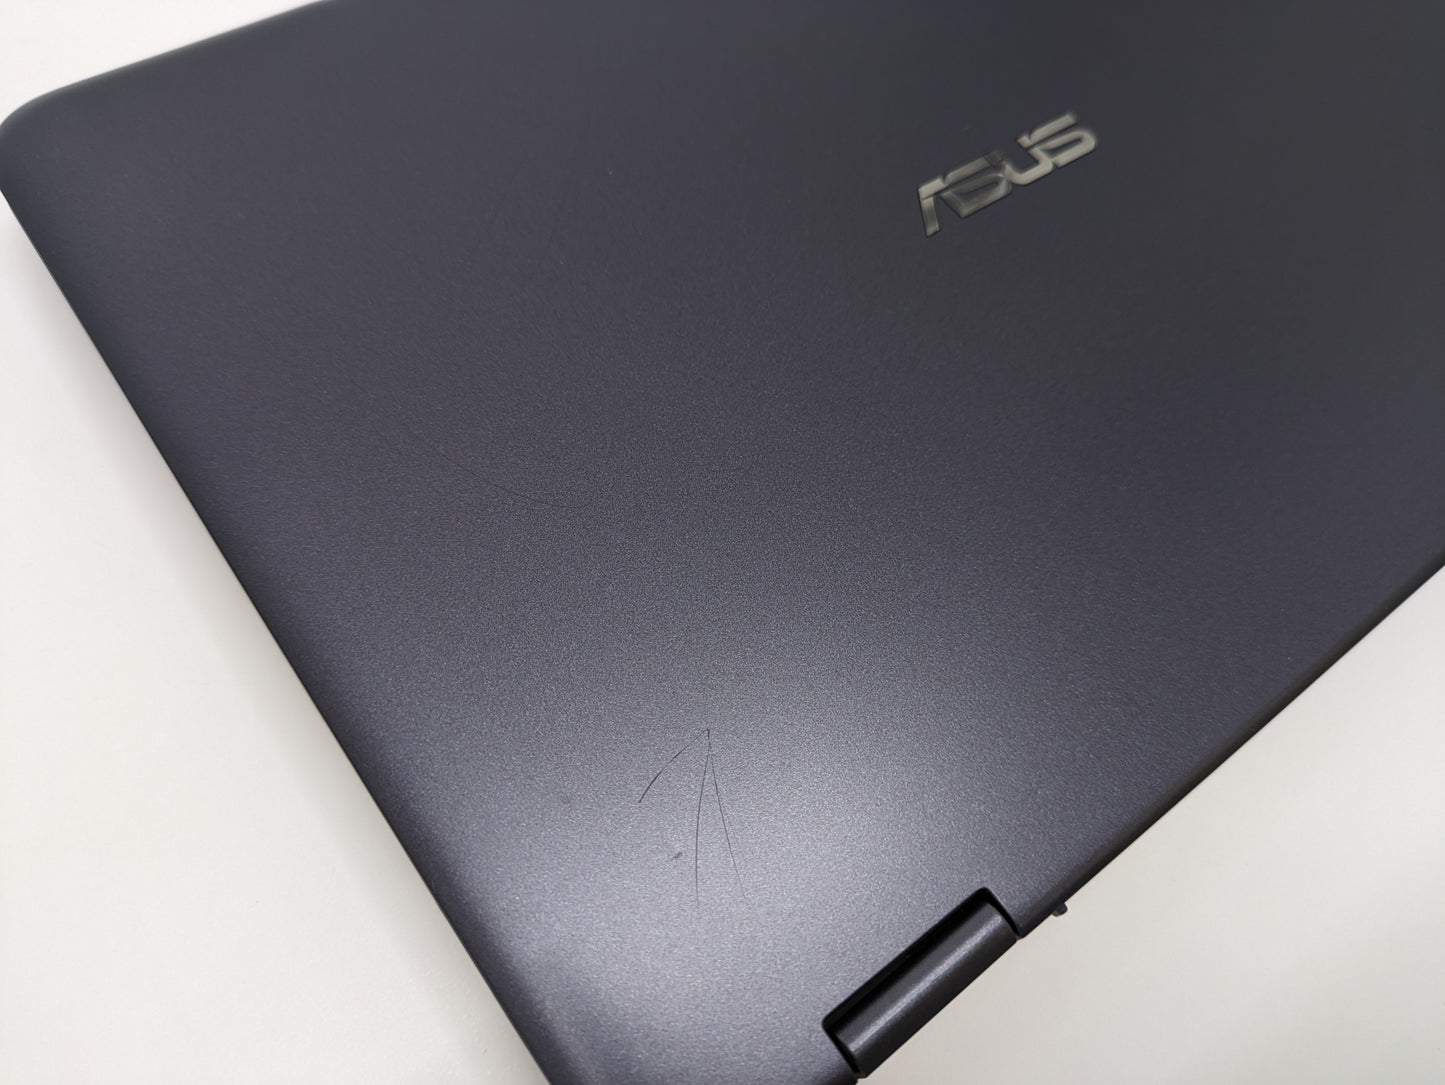 ASUS Vivobook Flip 12 - 11.6" Celeron N 4G 500GB HDD Laptop - 90NB0FK1-M02290 Reconditioned